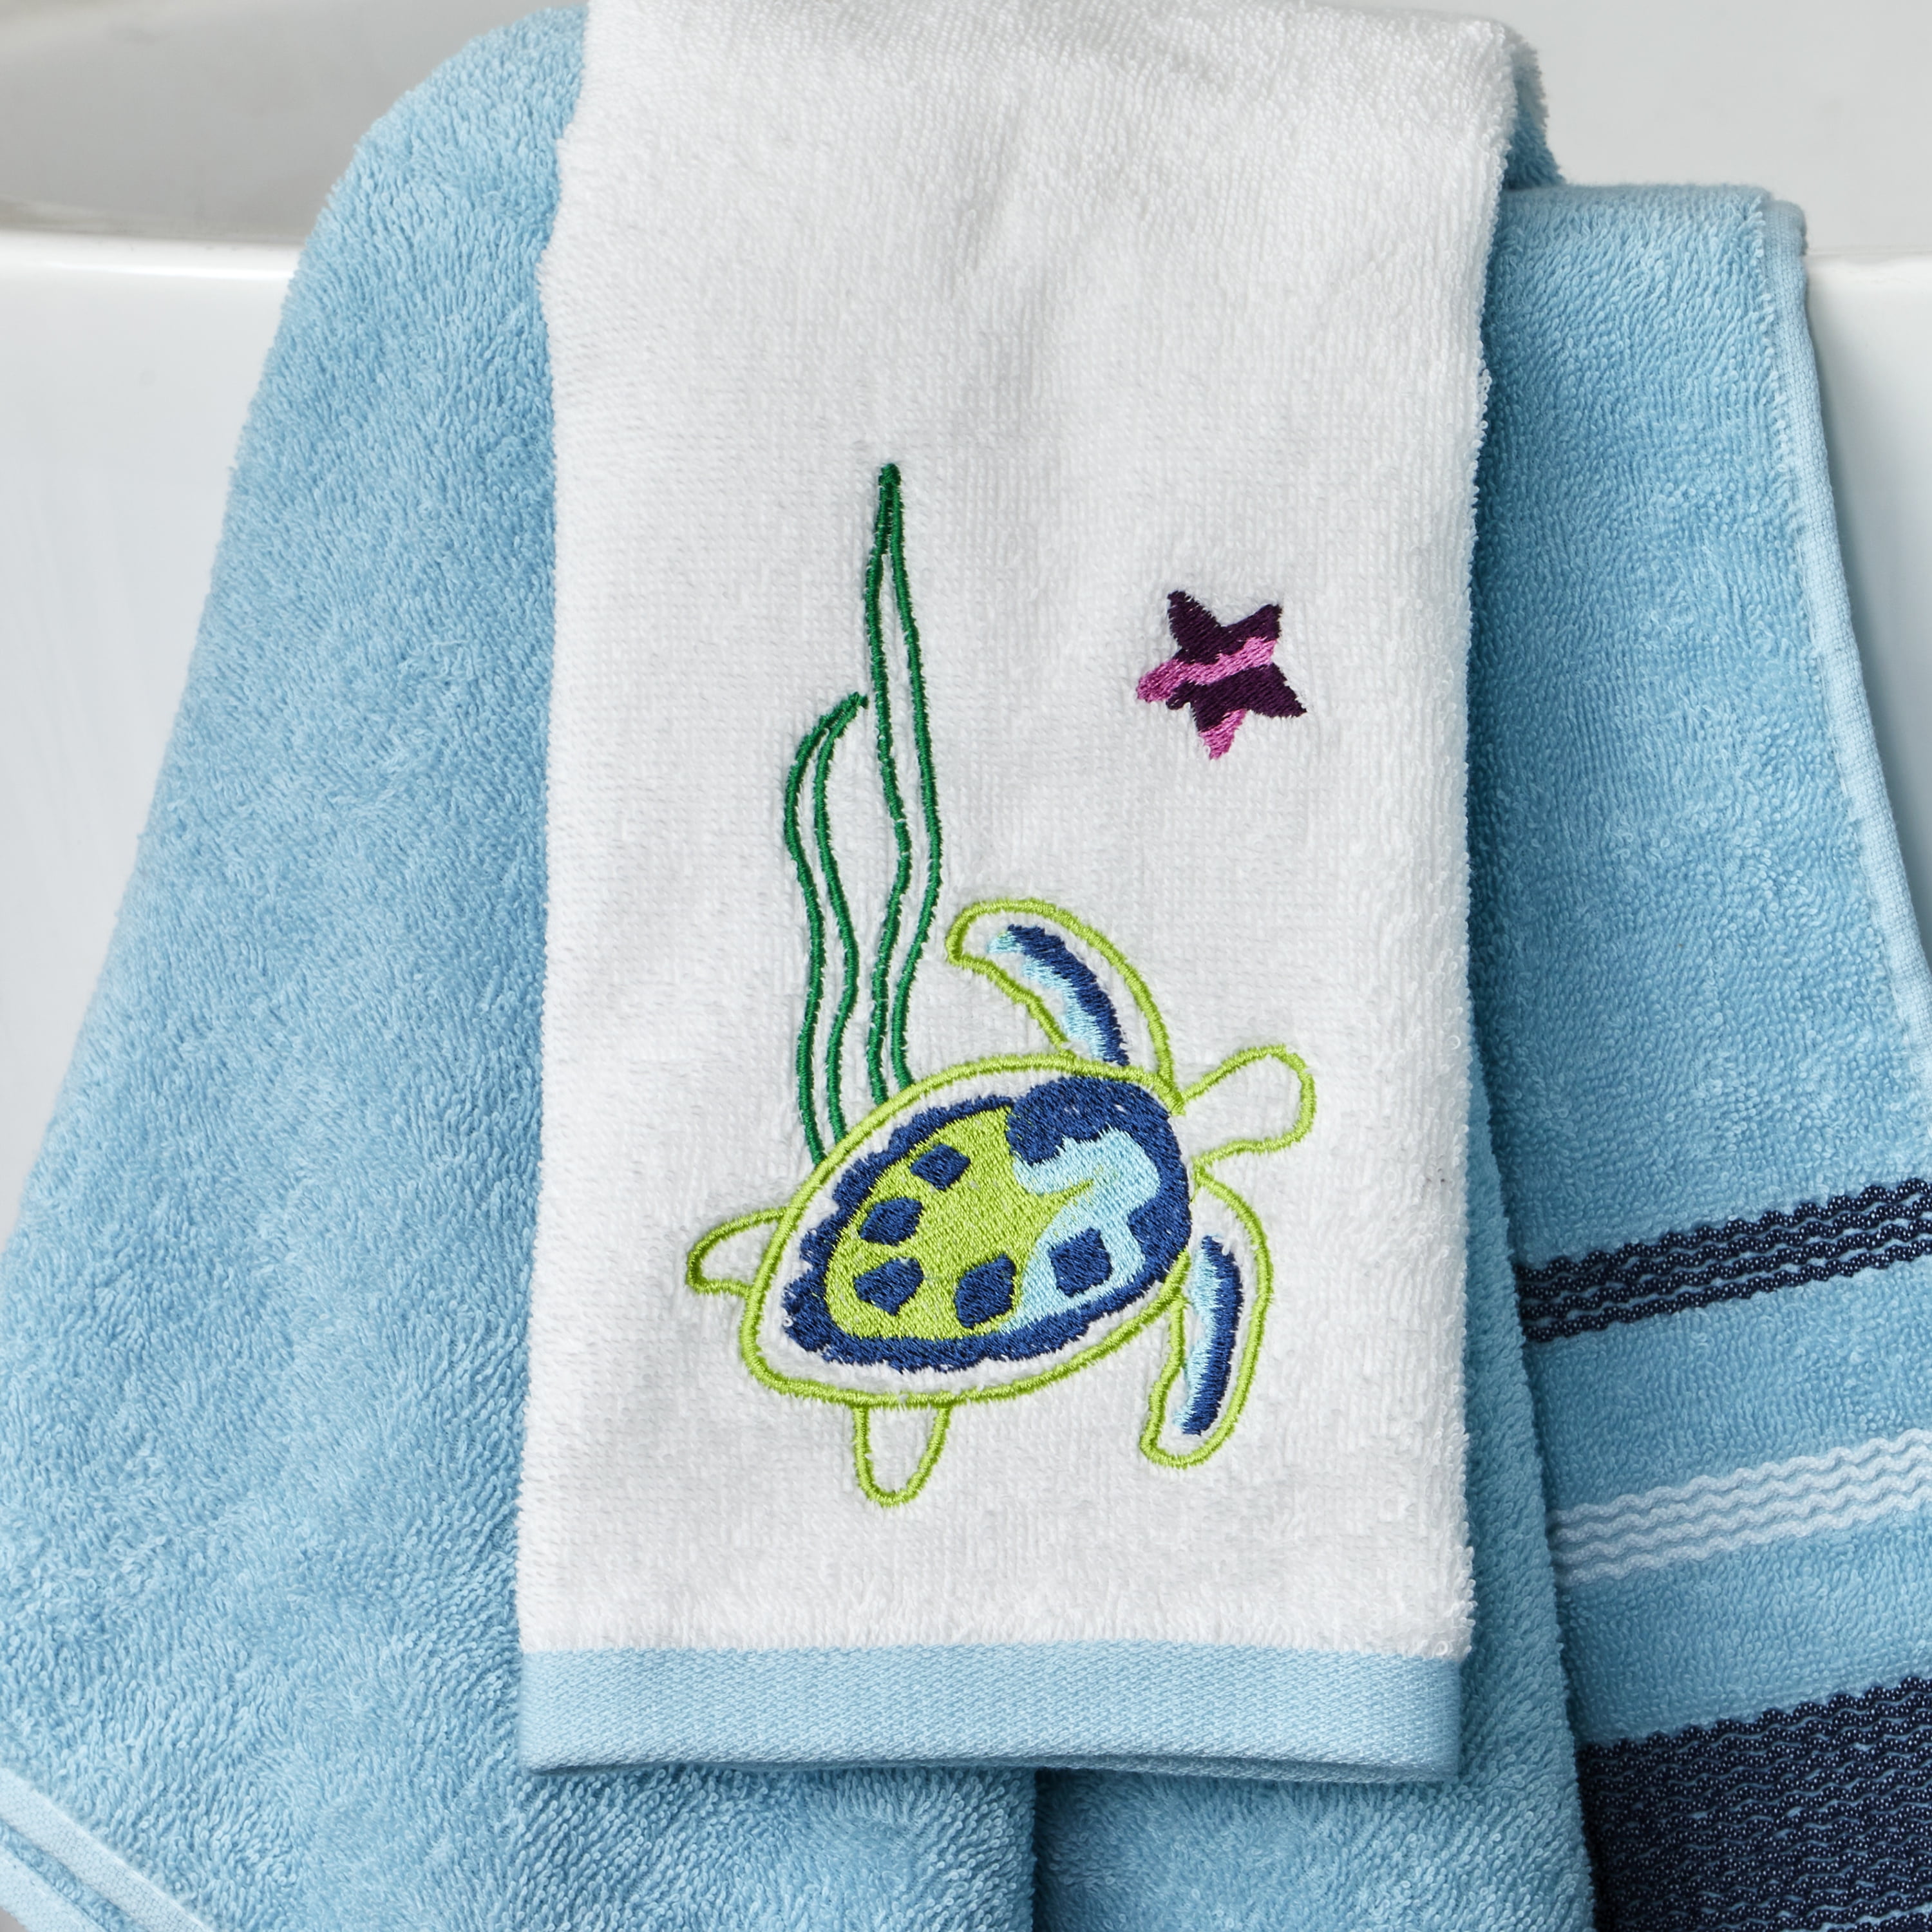 Mainstays 2 Piece Cotton Bath and Hand Towel Set, Watercolor Ocean